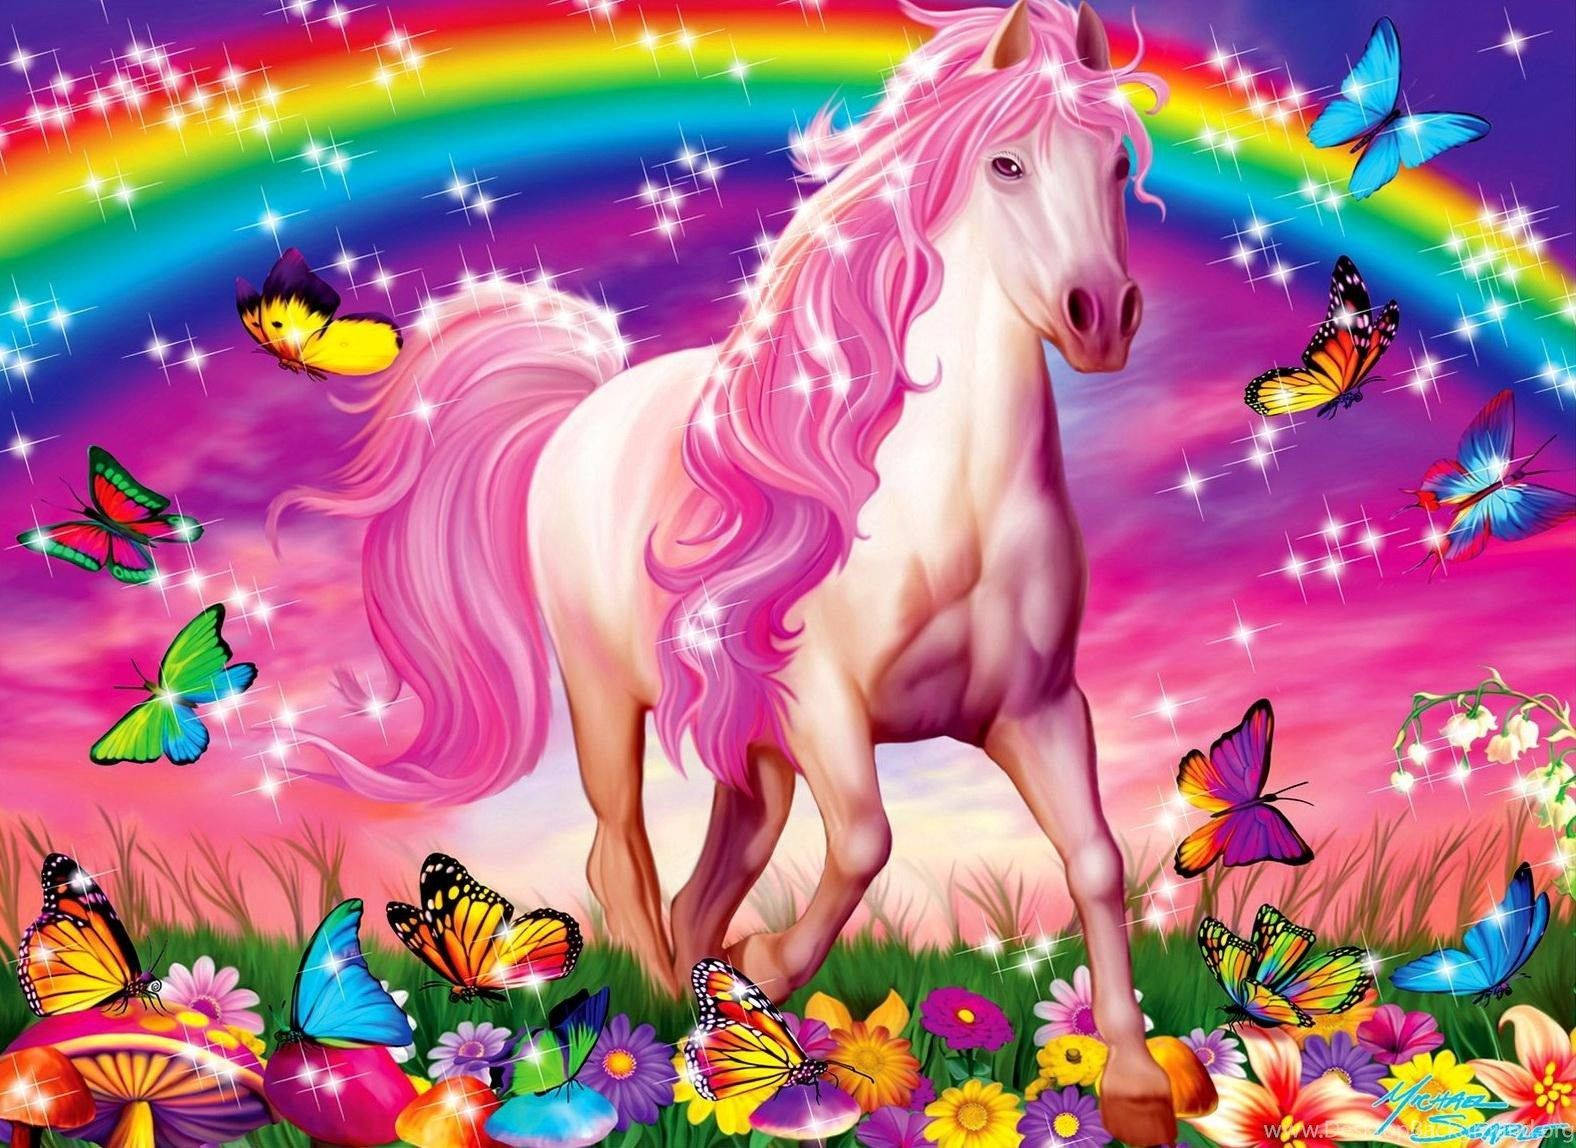 Rainbow Unicorn 1576X1148 Wallpaper and Background Image